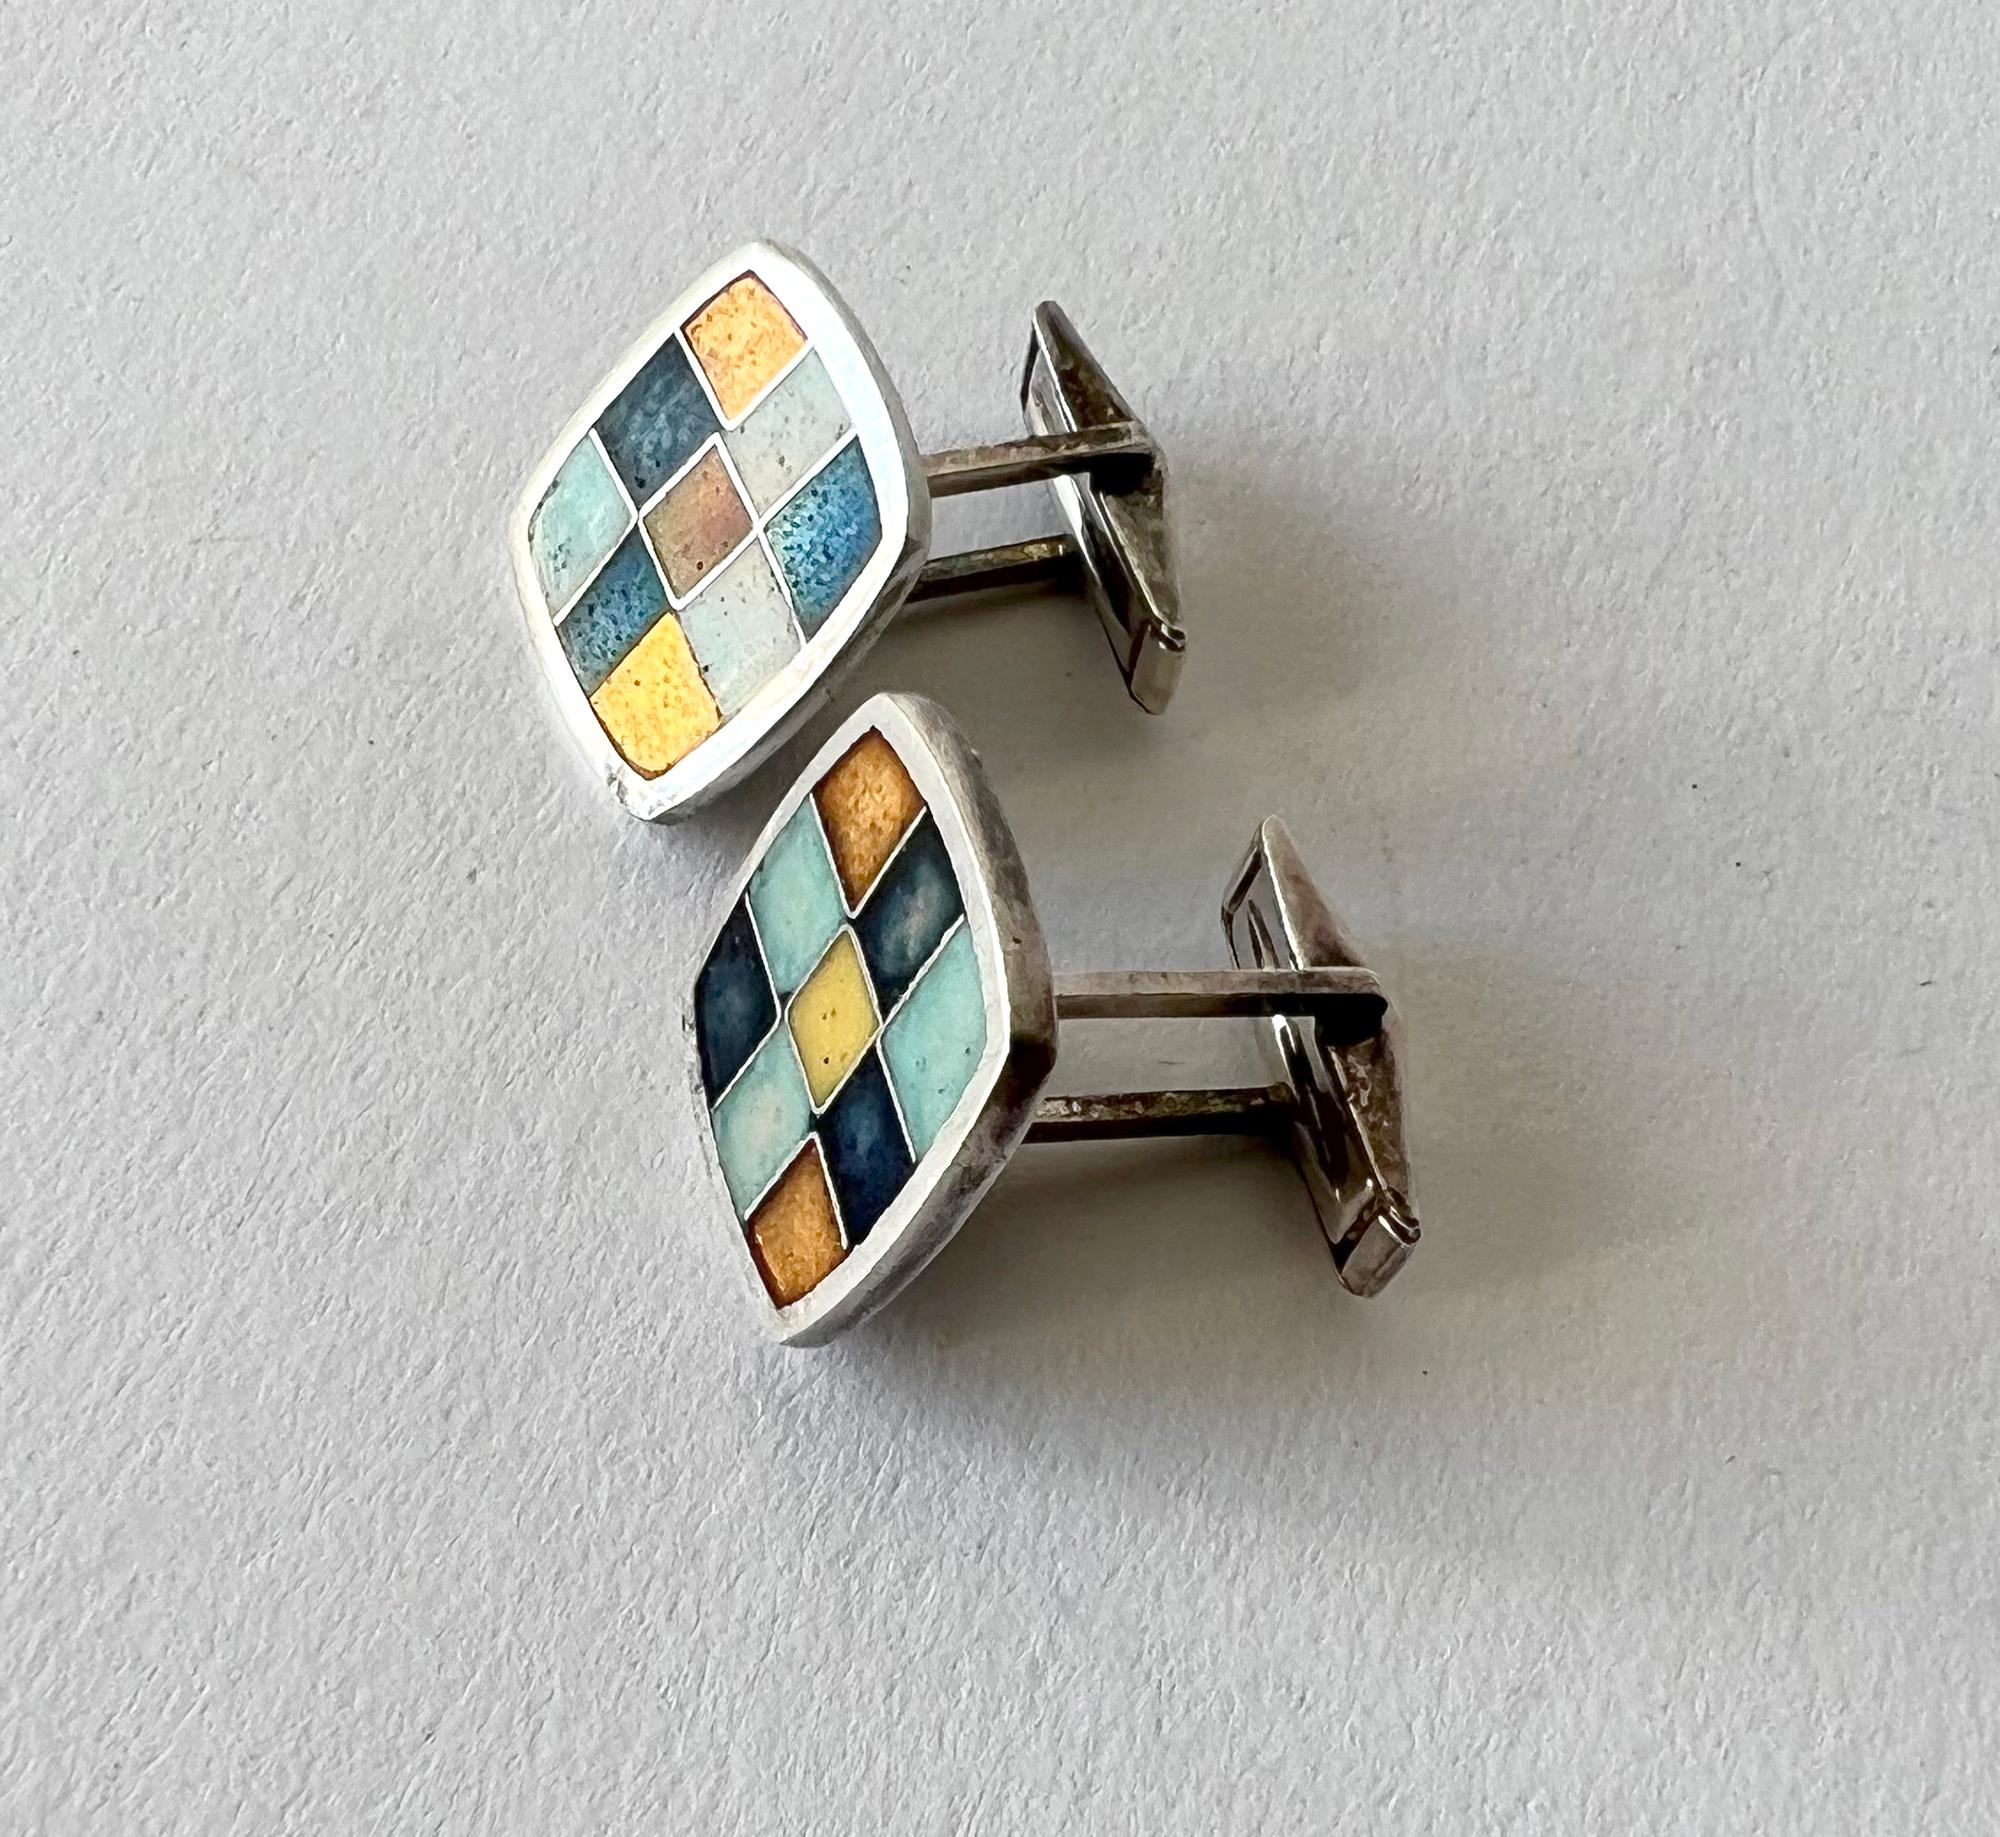  1950's silver over copper and enamel German modernist cufflinks created by Perli, Germany.  Cufflinks measure 3/4